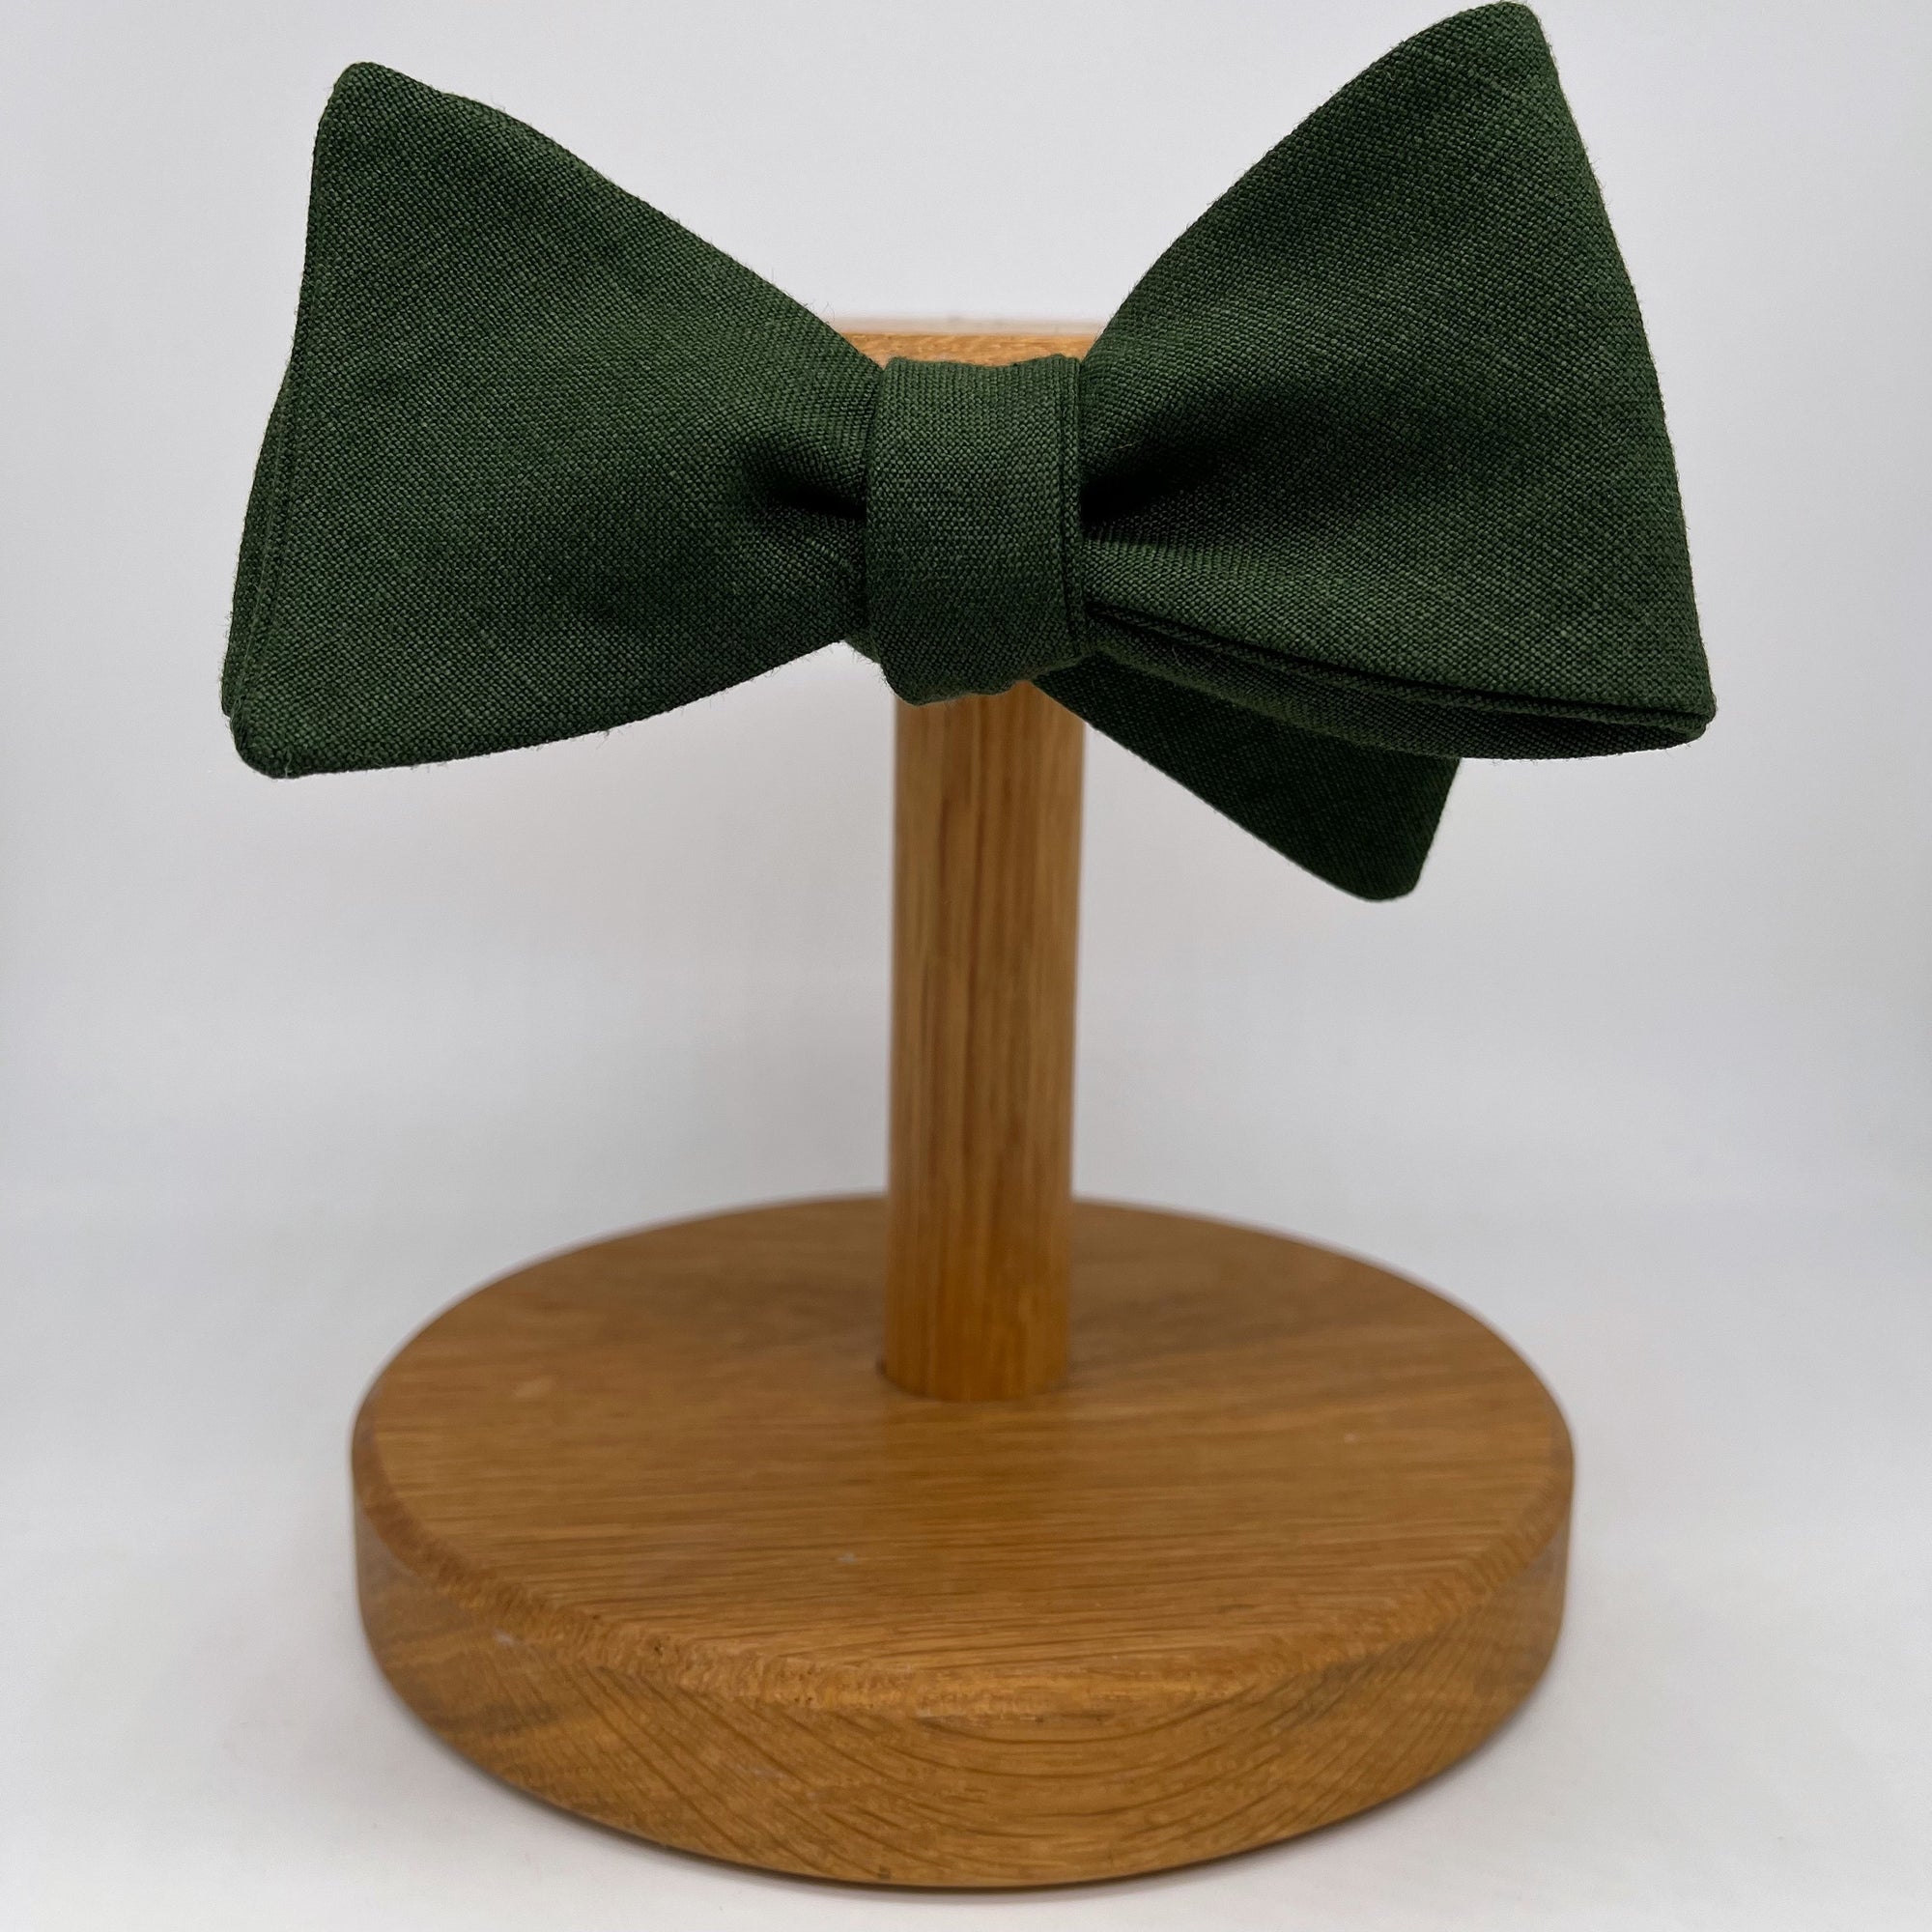 Irish linen self-tie bow tie in brunswick green by the belfast bow company